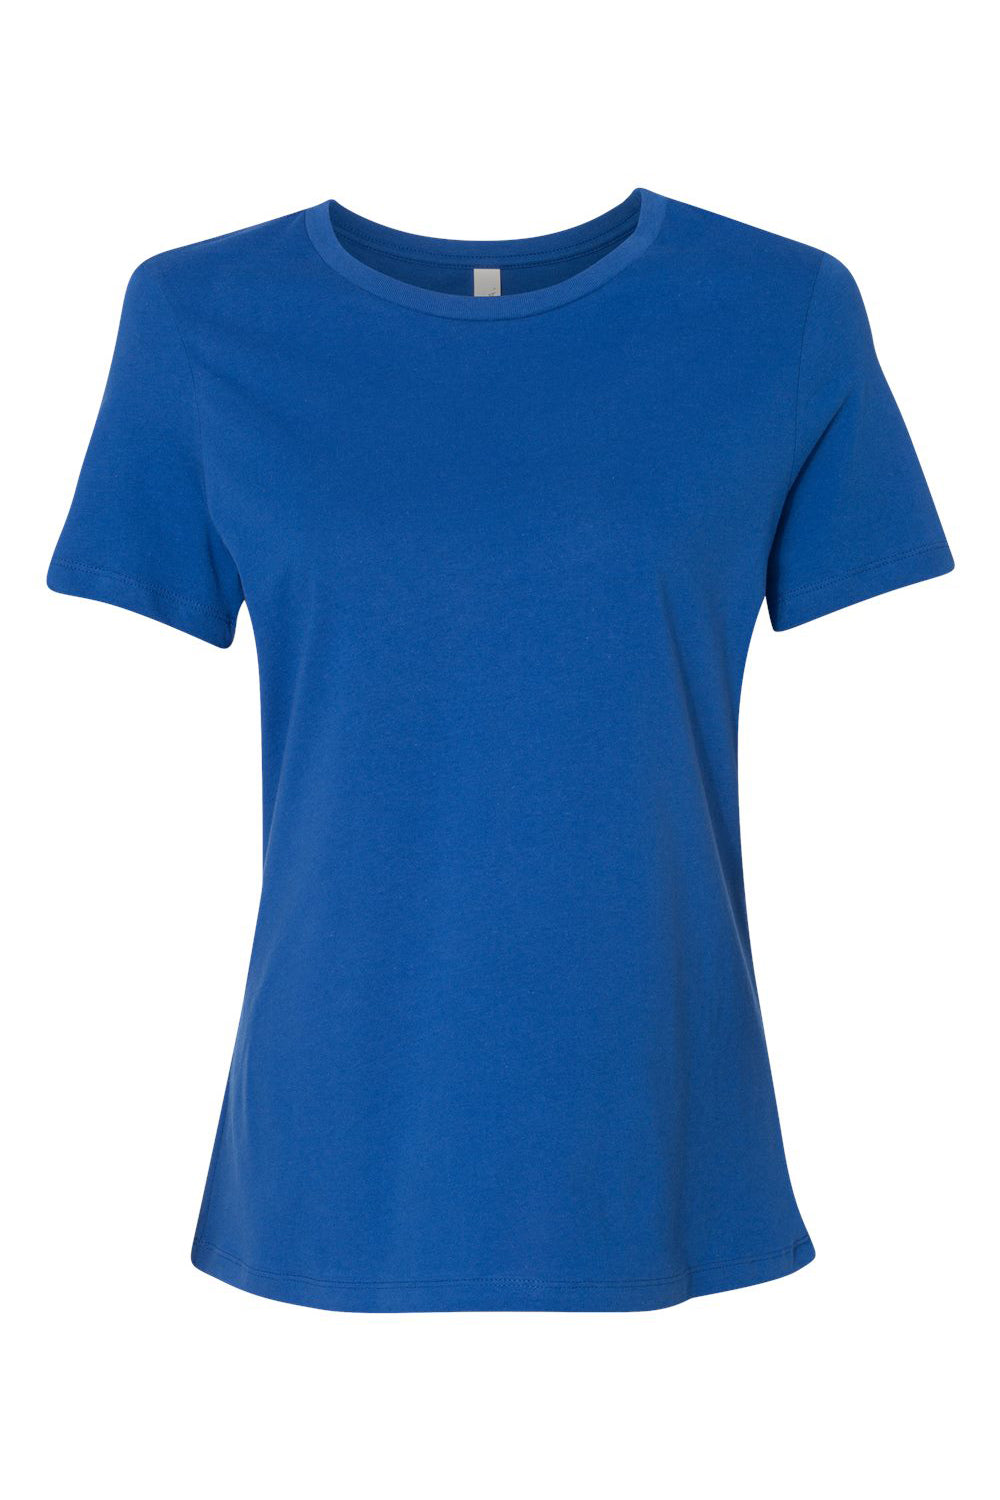 Bella + Canvas BC6400/B6400/6400 Womens Relaxed Jersey Short Sleeve Crewneck T-Shirt True Royal Blue Flat Front